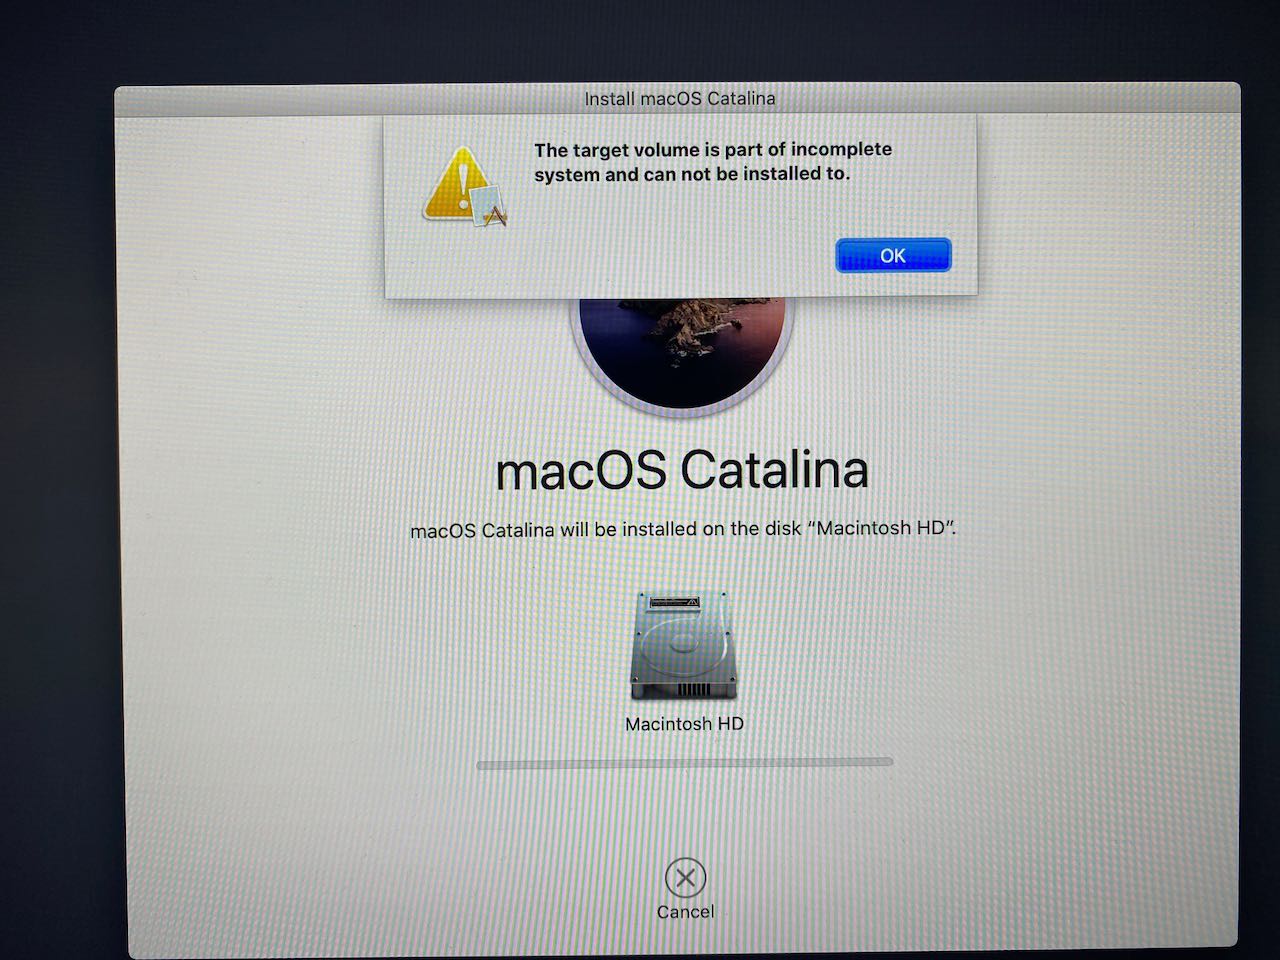 Studio is stuck during login on Mac - Platform Usage Support